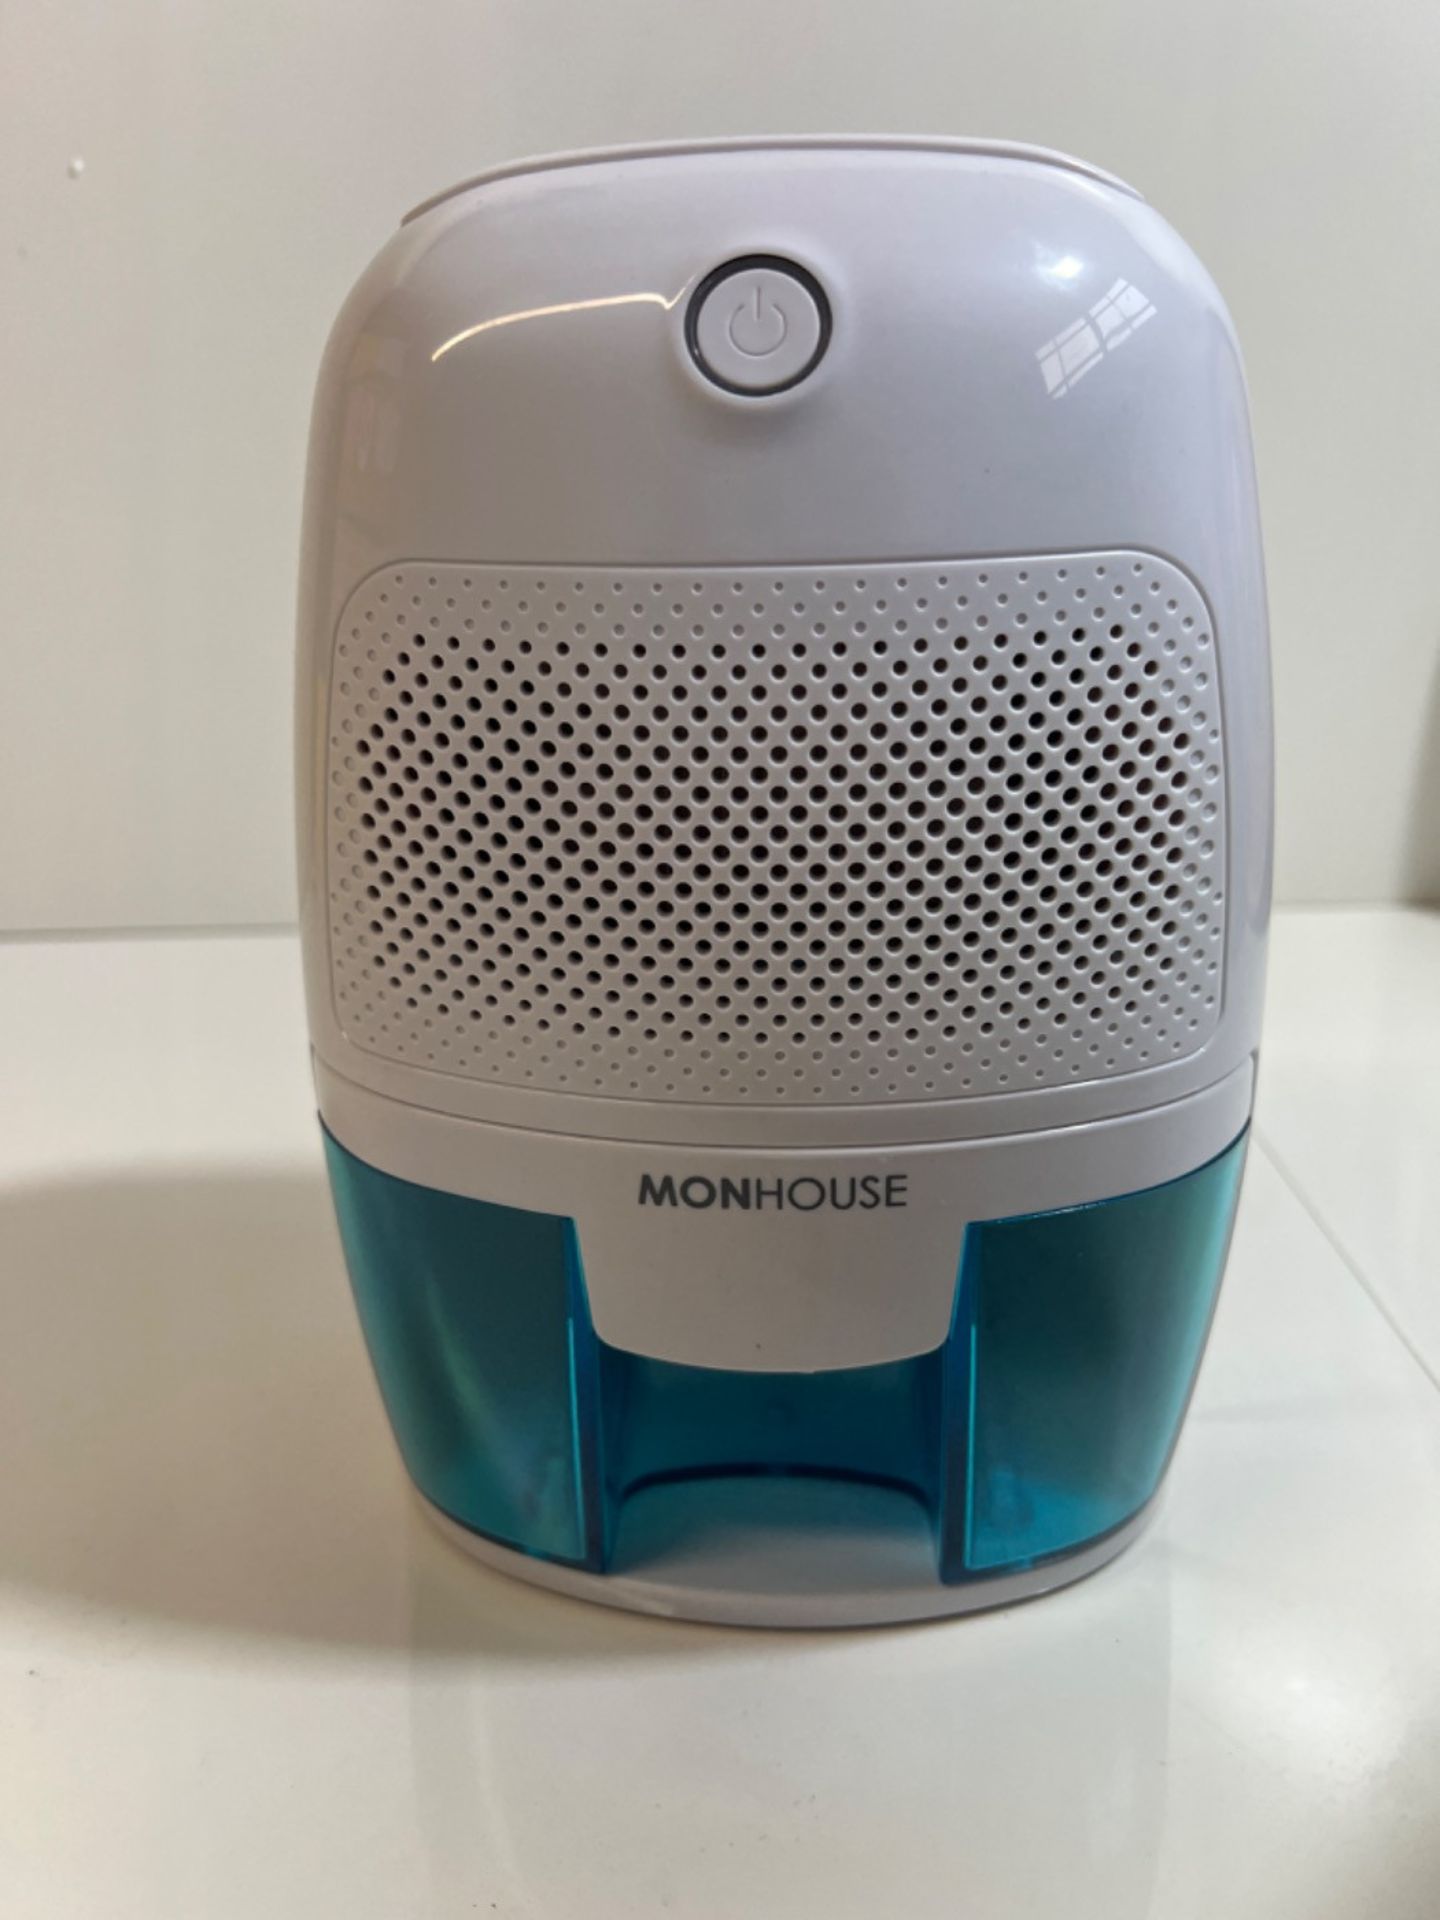 MONHOUSE Dehumidifier 600ml Portable, Compact & Quiet Moisture Absorber - Mini Air Dehumidifier for - Image 3 of 3